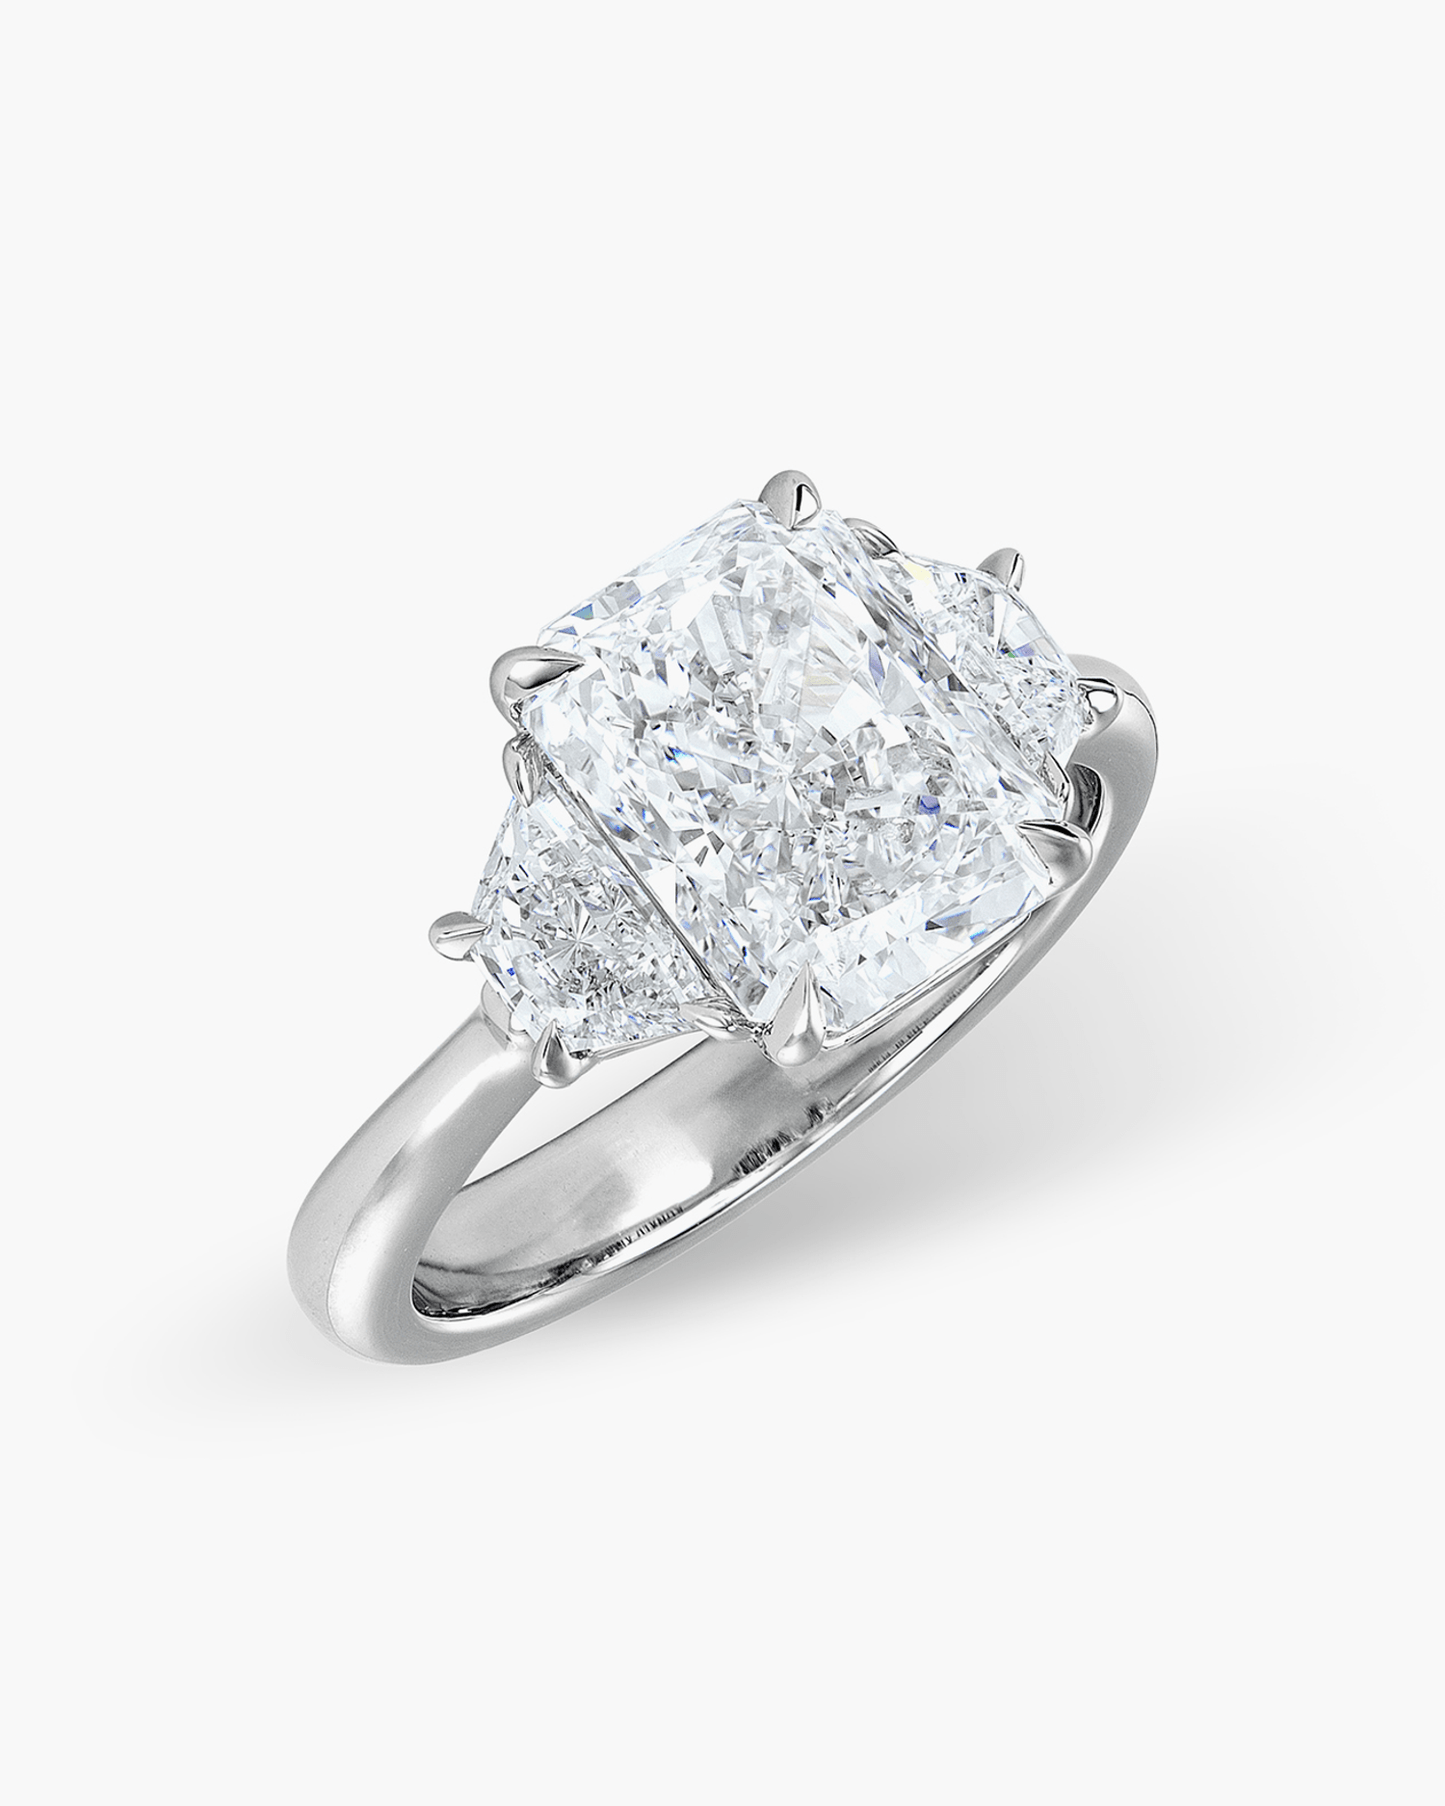 3.03 carat Radiant Cut Diamond Ring